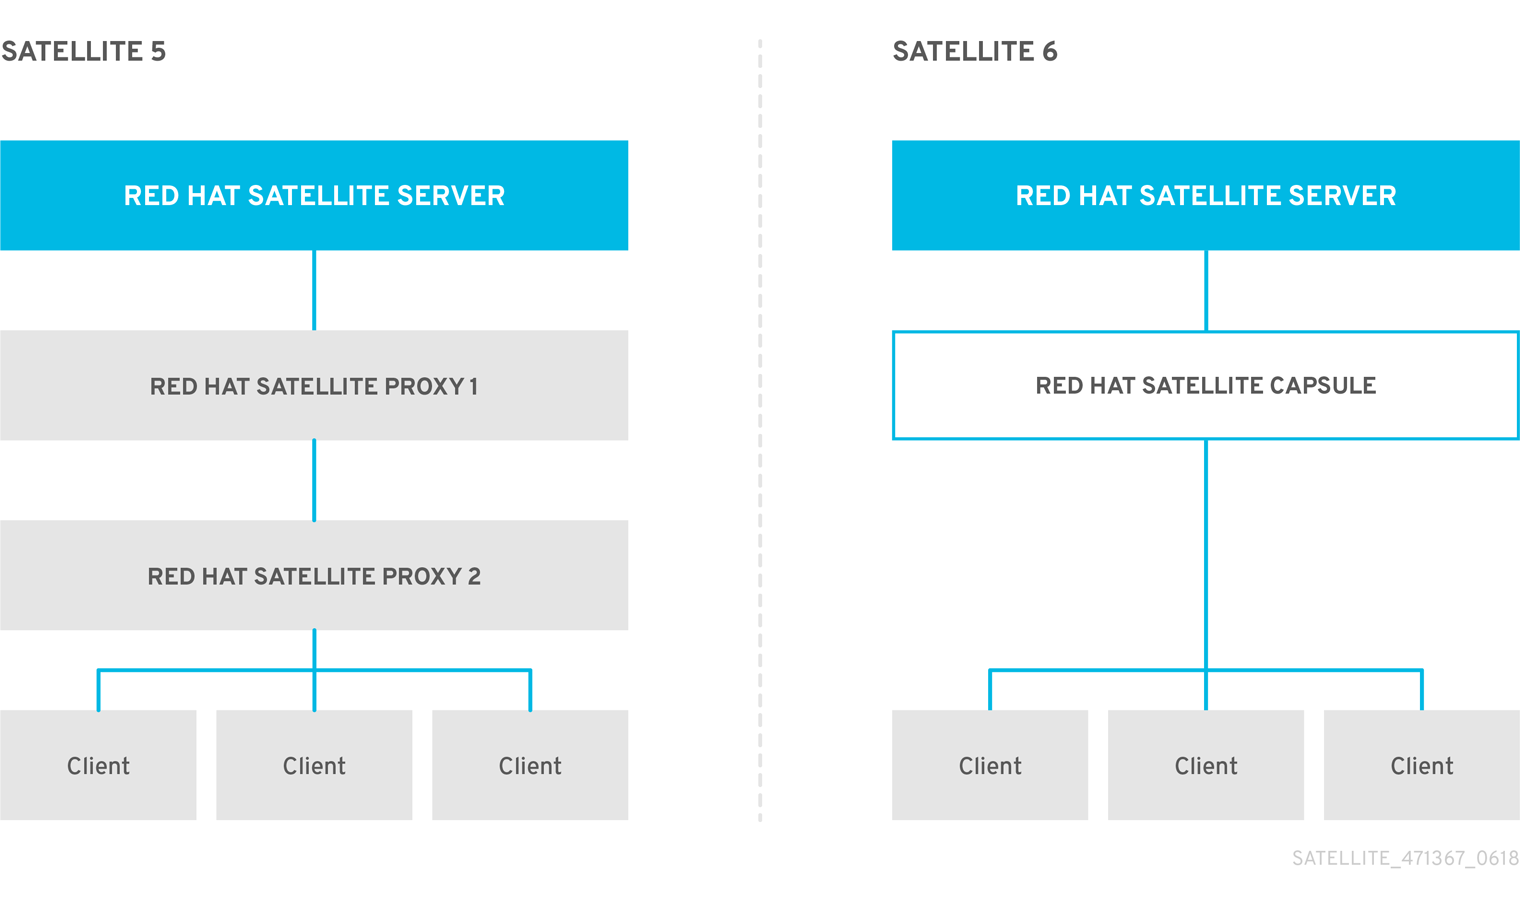 Comparison of Satellite 5 Proxy and Satellite 6 Capsule Servers